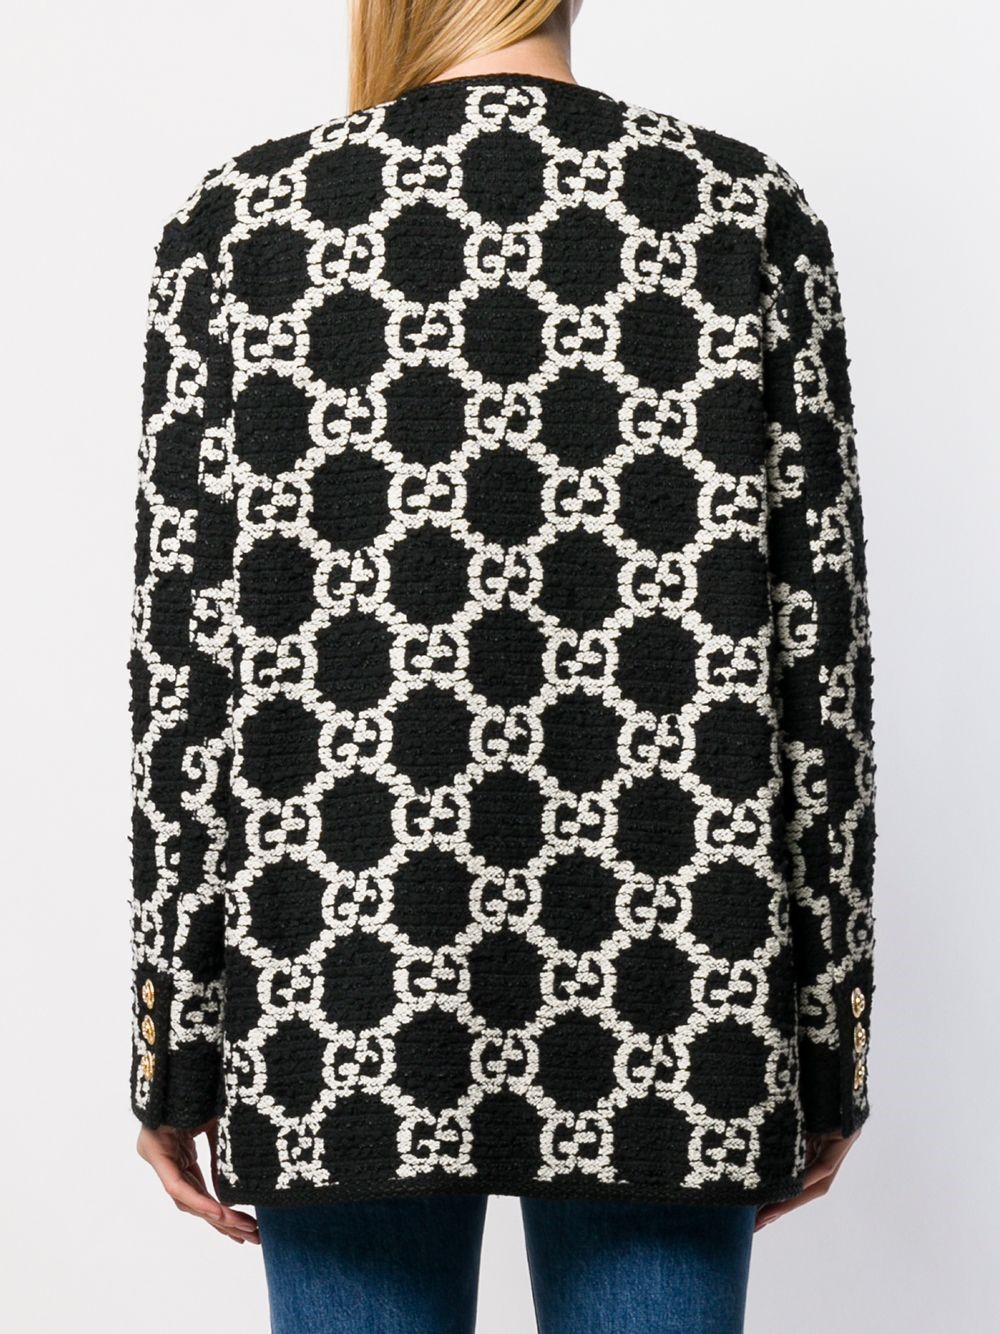 black and white gucci sweater